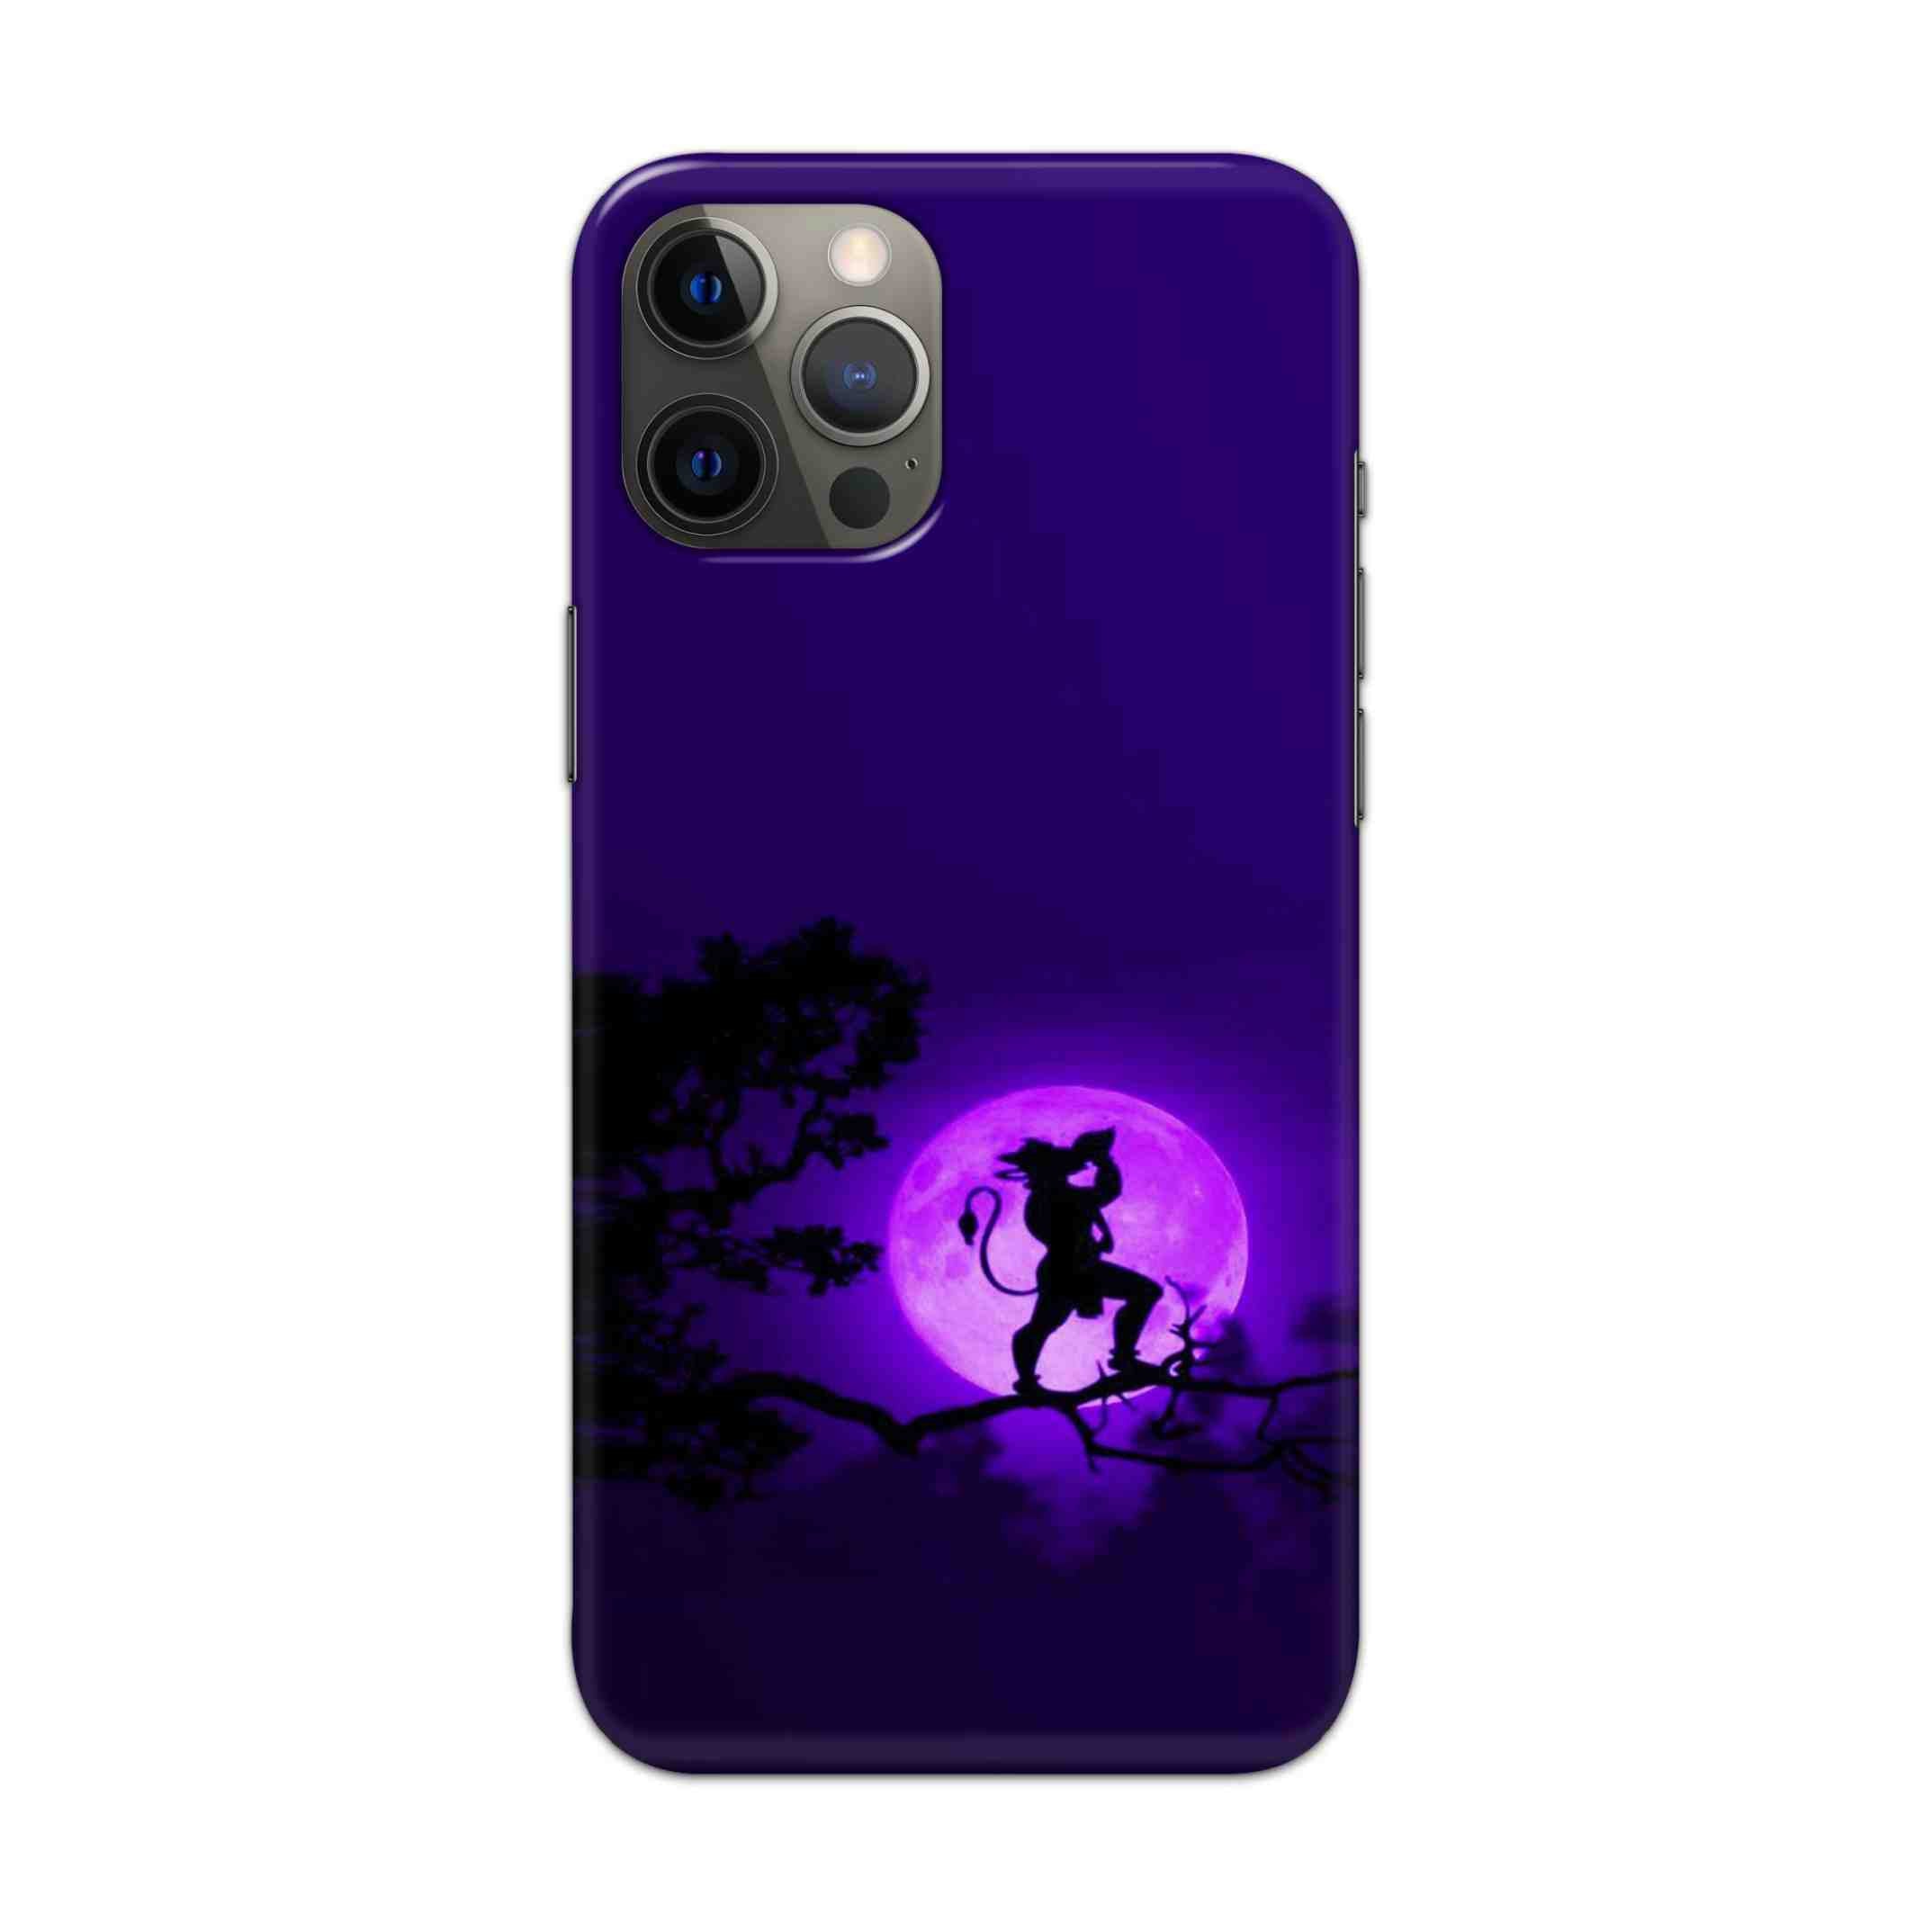 Buy Hanuman Hard Back Mobile Phone Case/Cover For Apple iPhone 12 pro max Online